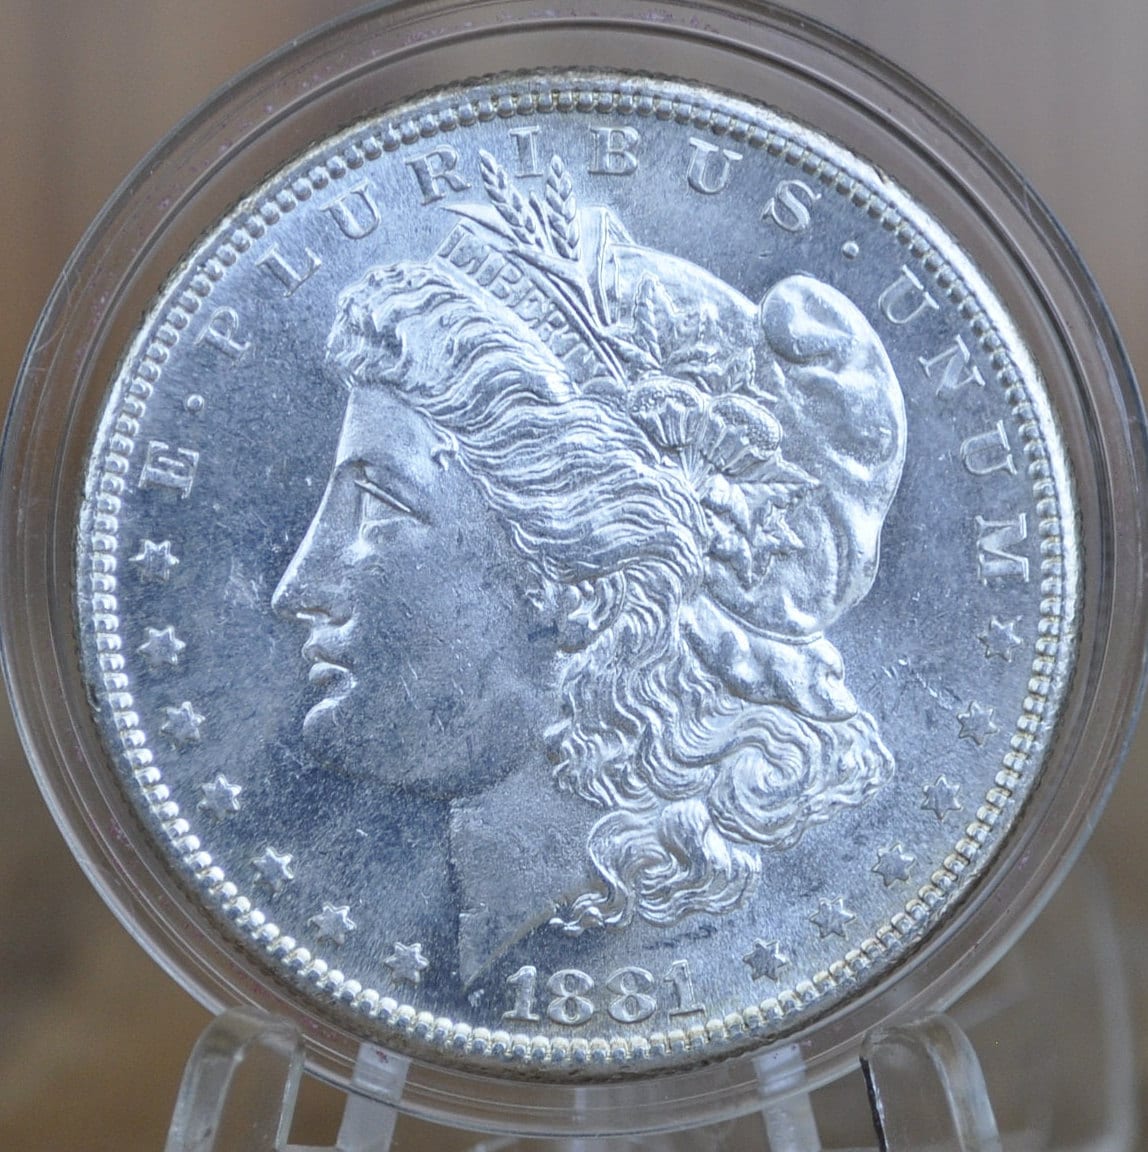 1881-S Morgan Silver Dollar - MS60/BU (Uncirculated) Grade, Beautiful Mint Luster - San Francisco Mint - 1881 S Morgan Dollar - High Grade